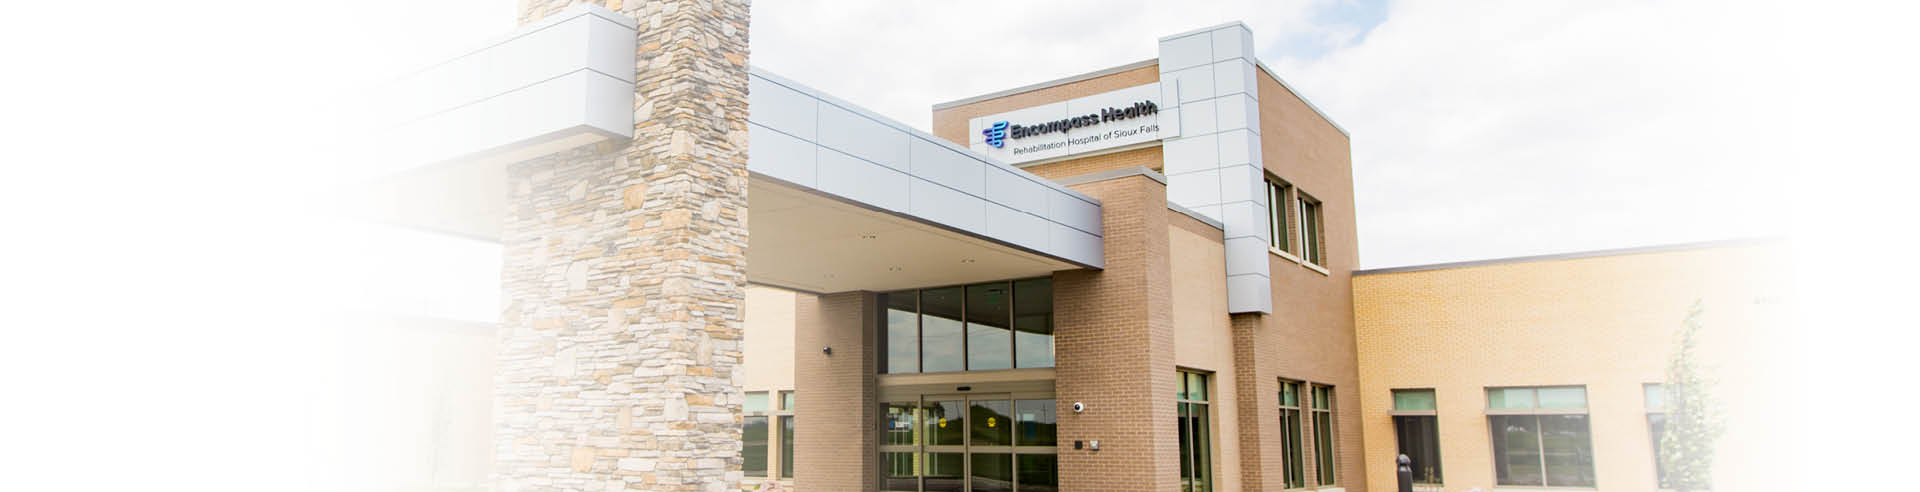 Encompass Health Rehabilitation Hospital of Sioux Falls exterior